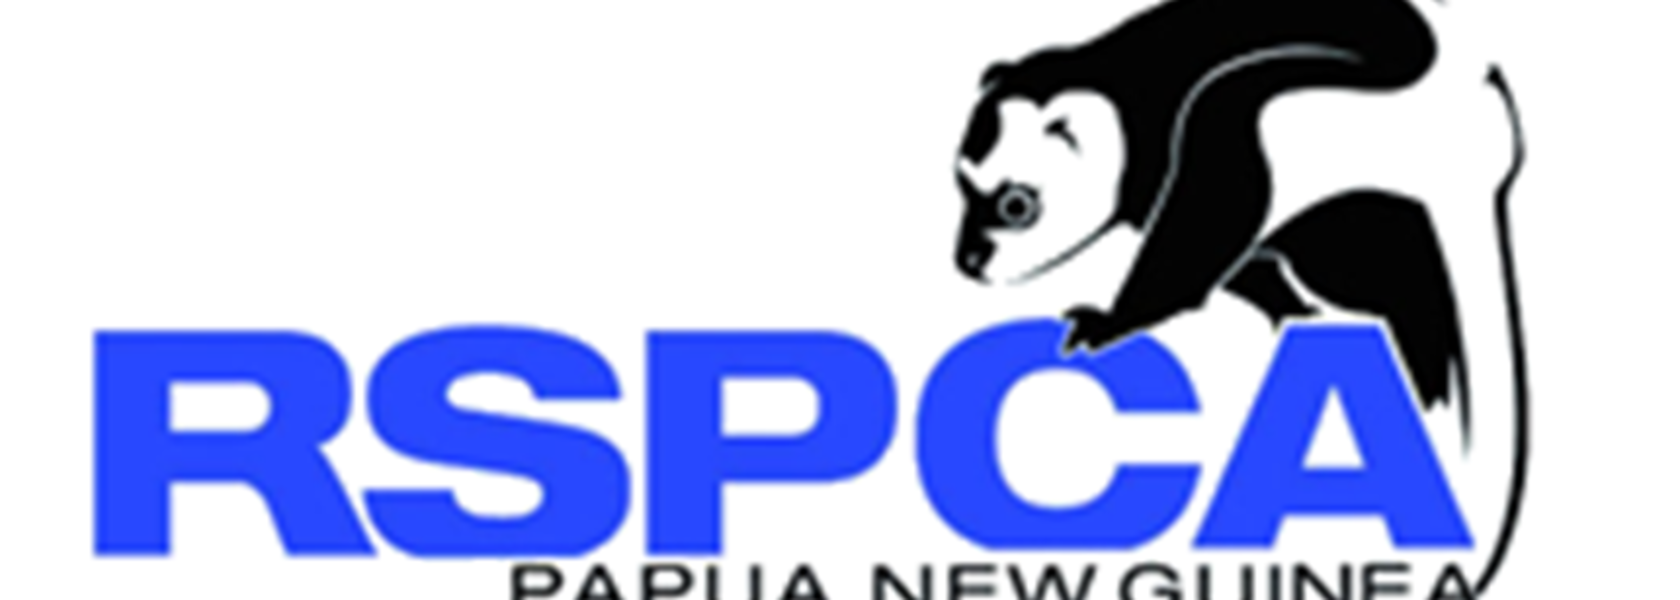 Rspca Assured Logo | Rspca As